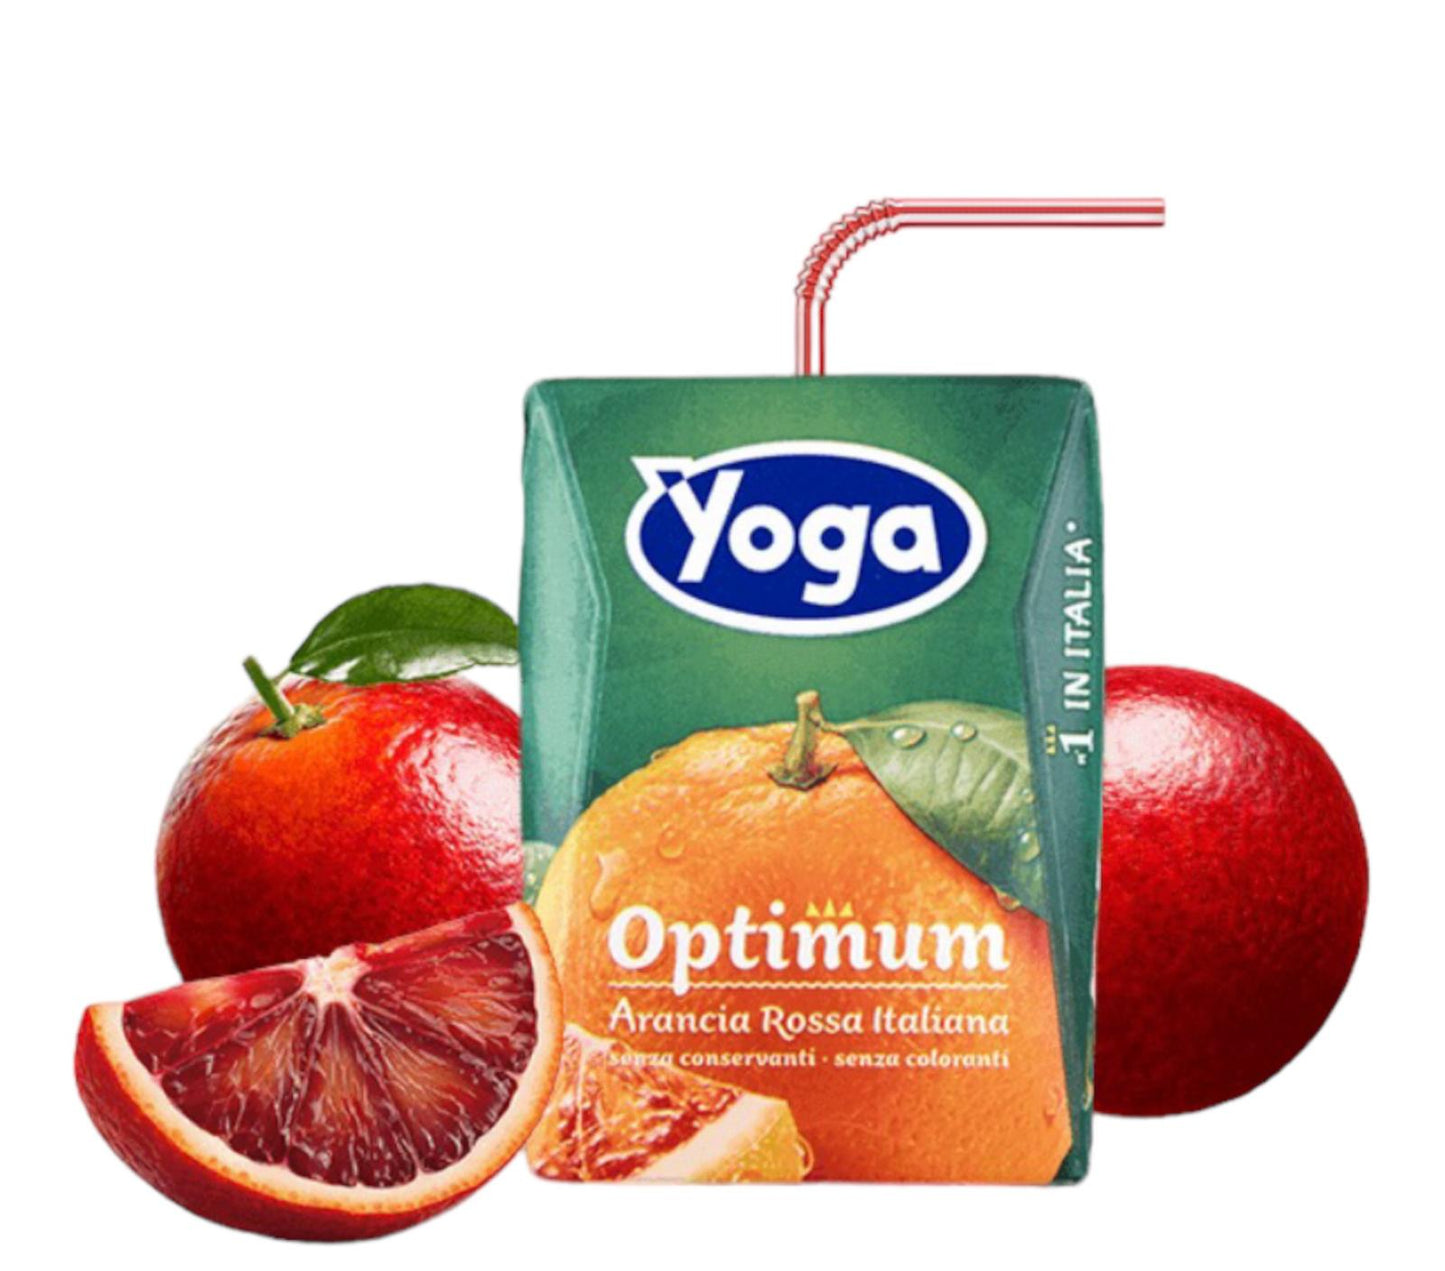 Yoga succo optimum arancia rossa brick da 200ml